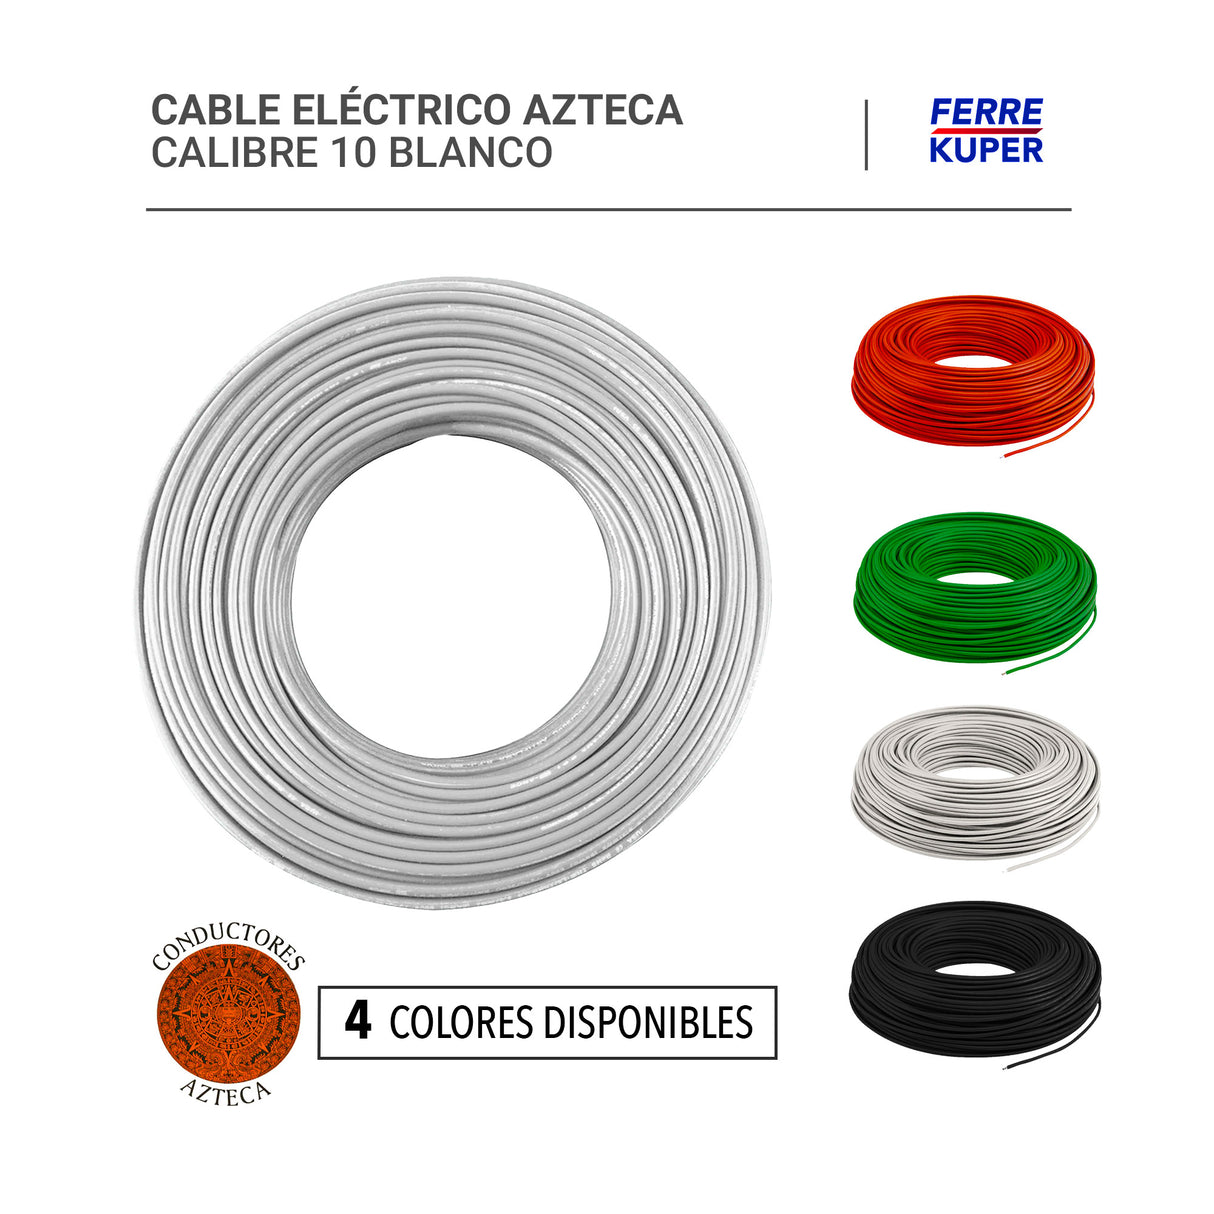 Cable Eléctrico Azteca THW Calibre 10